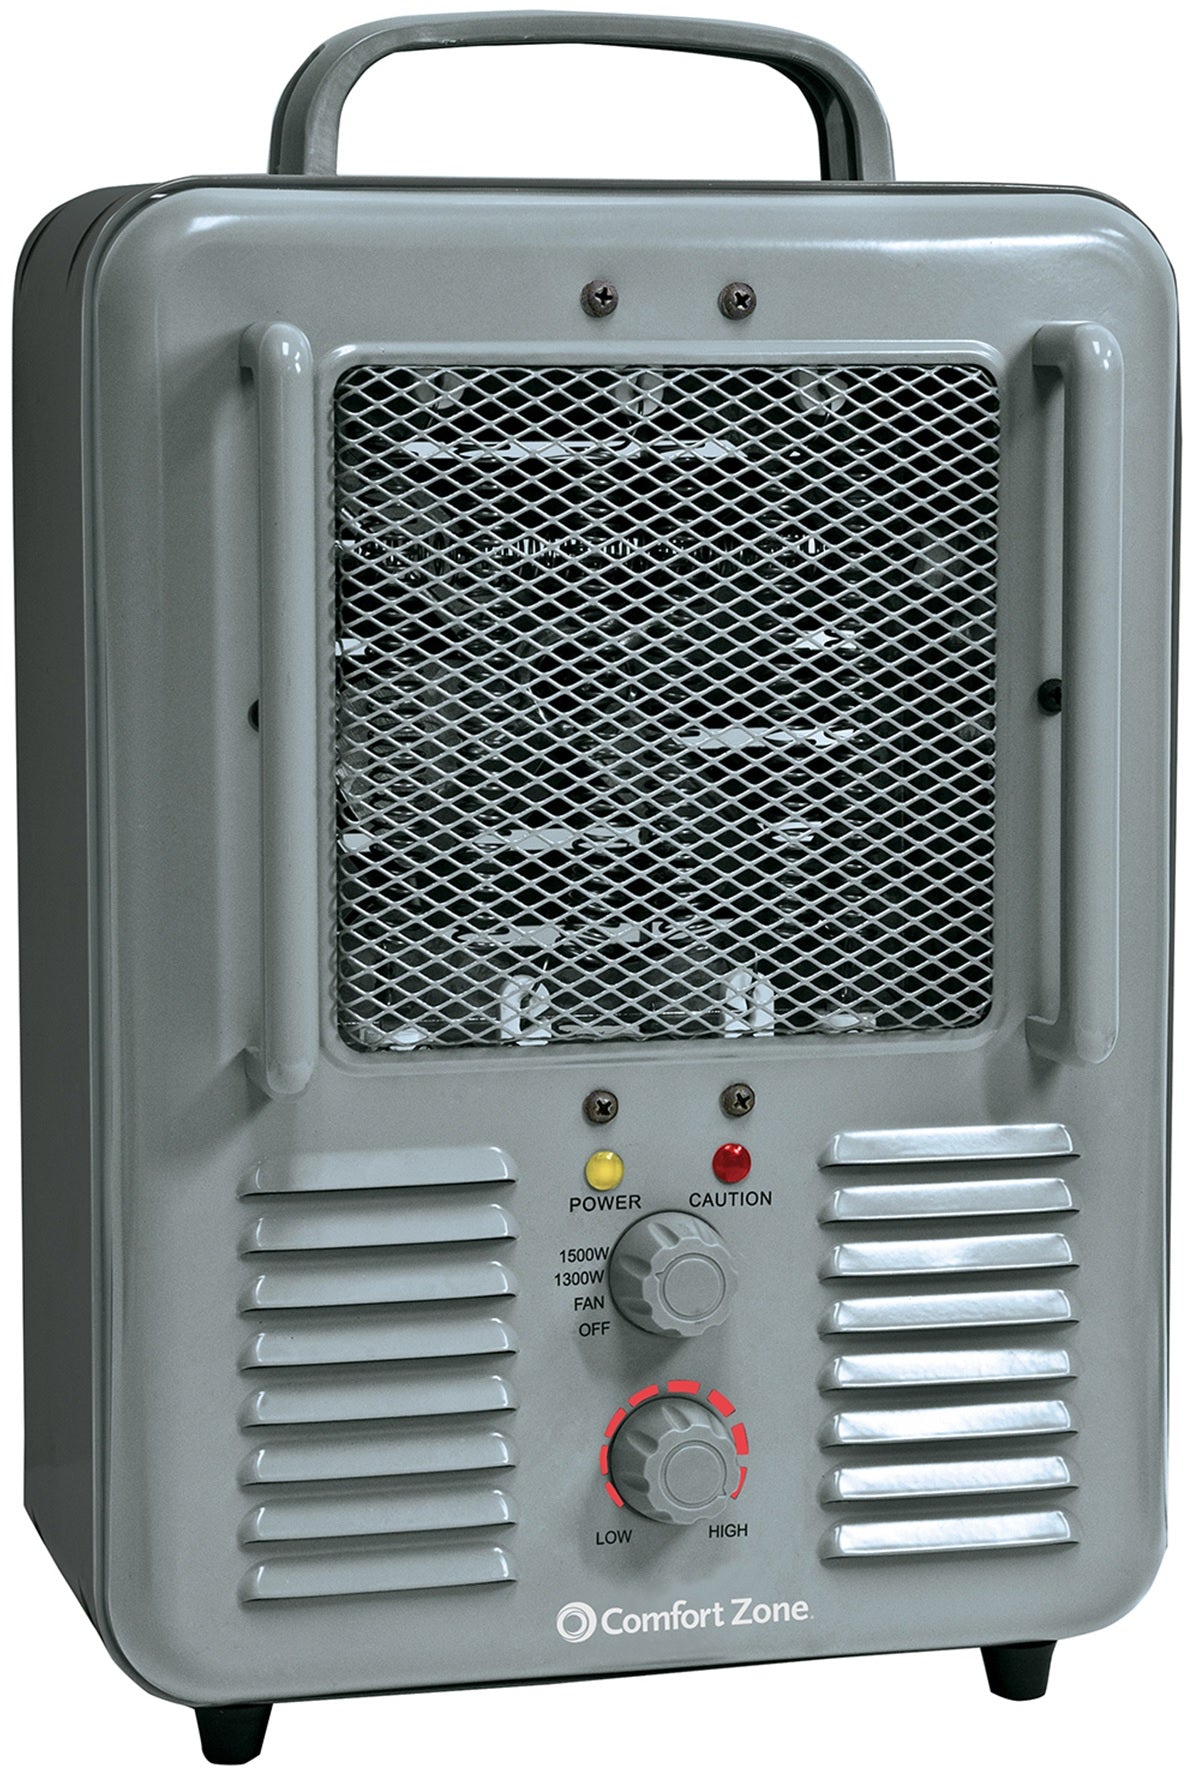 Comfort Zone CZ798 Milkhouse Electric Utility Heater, 1300/1500 Watts